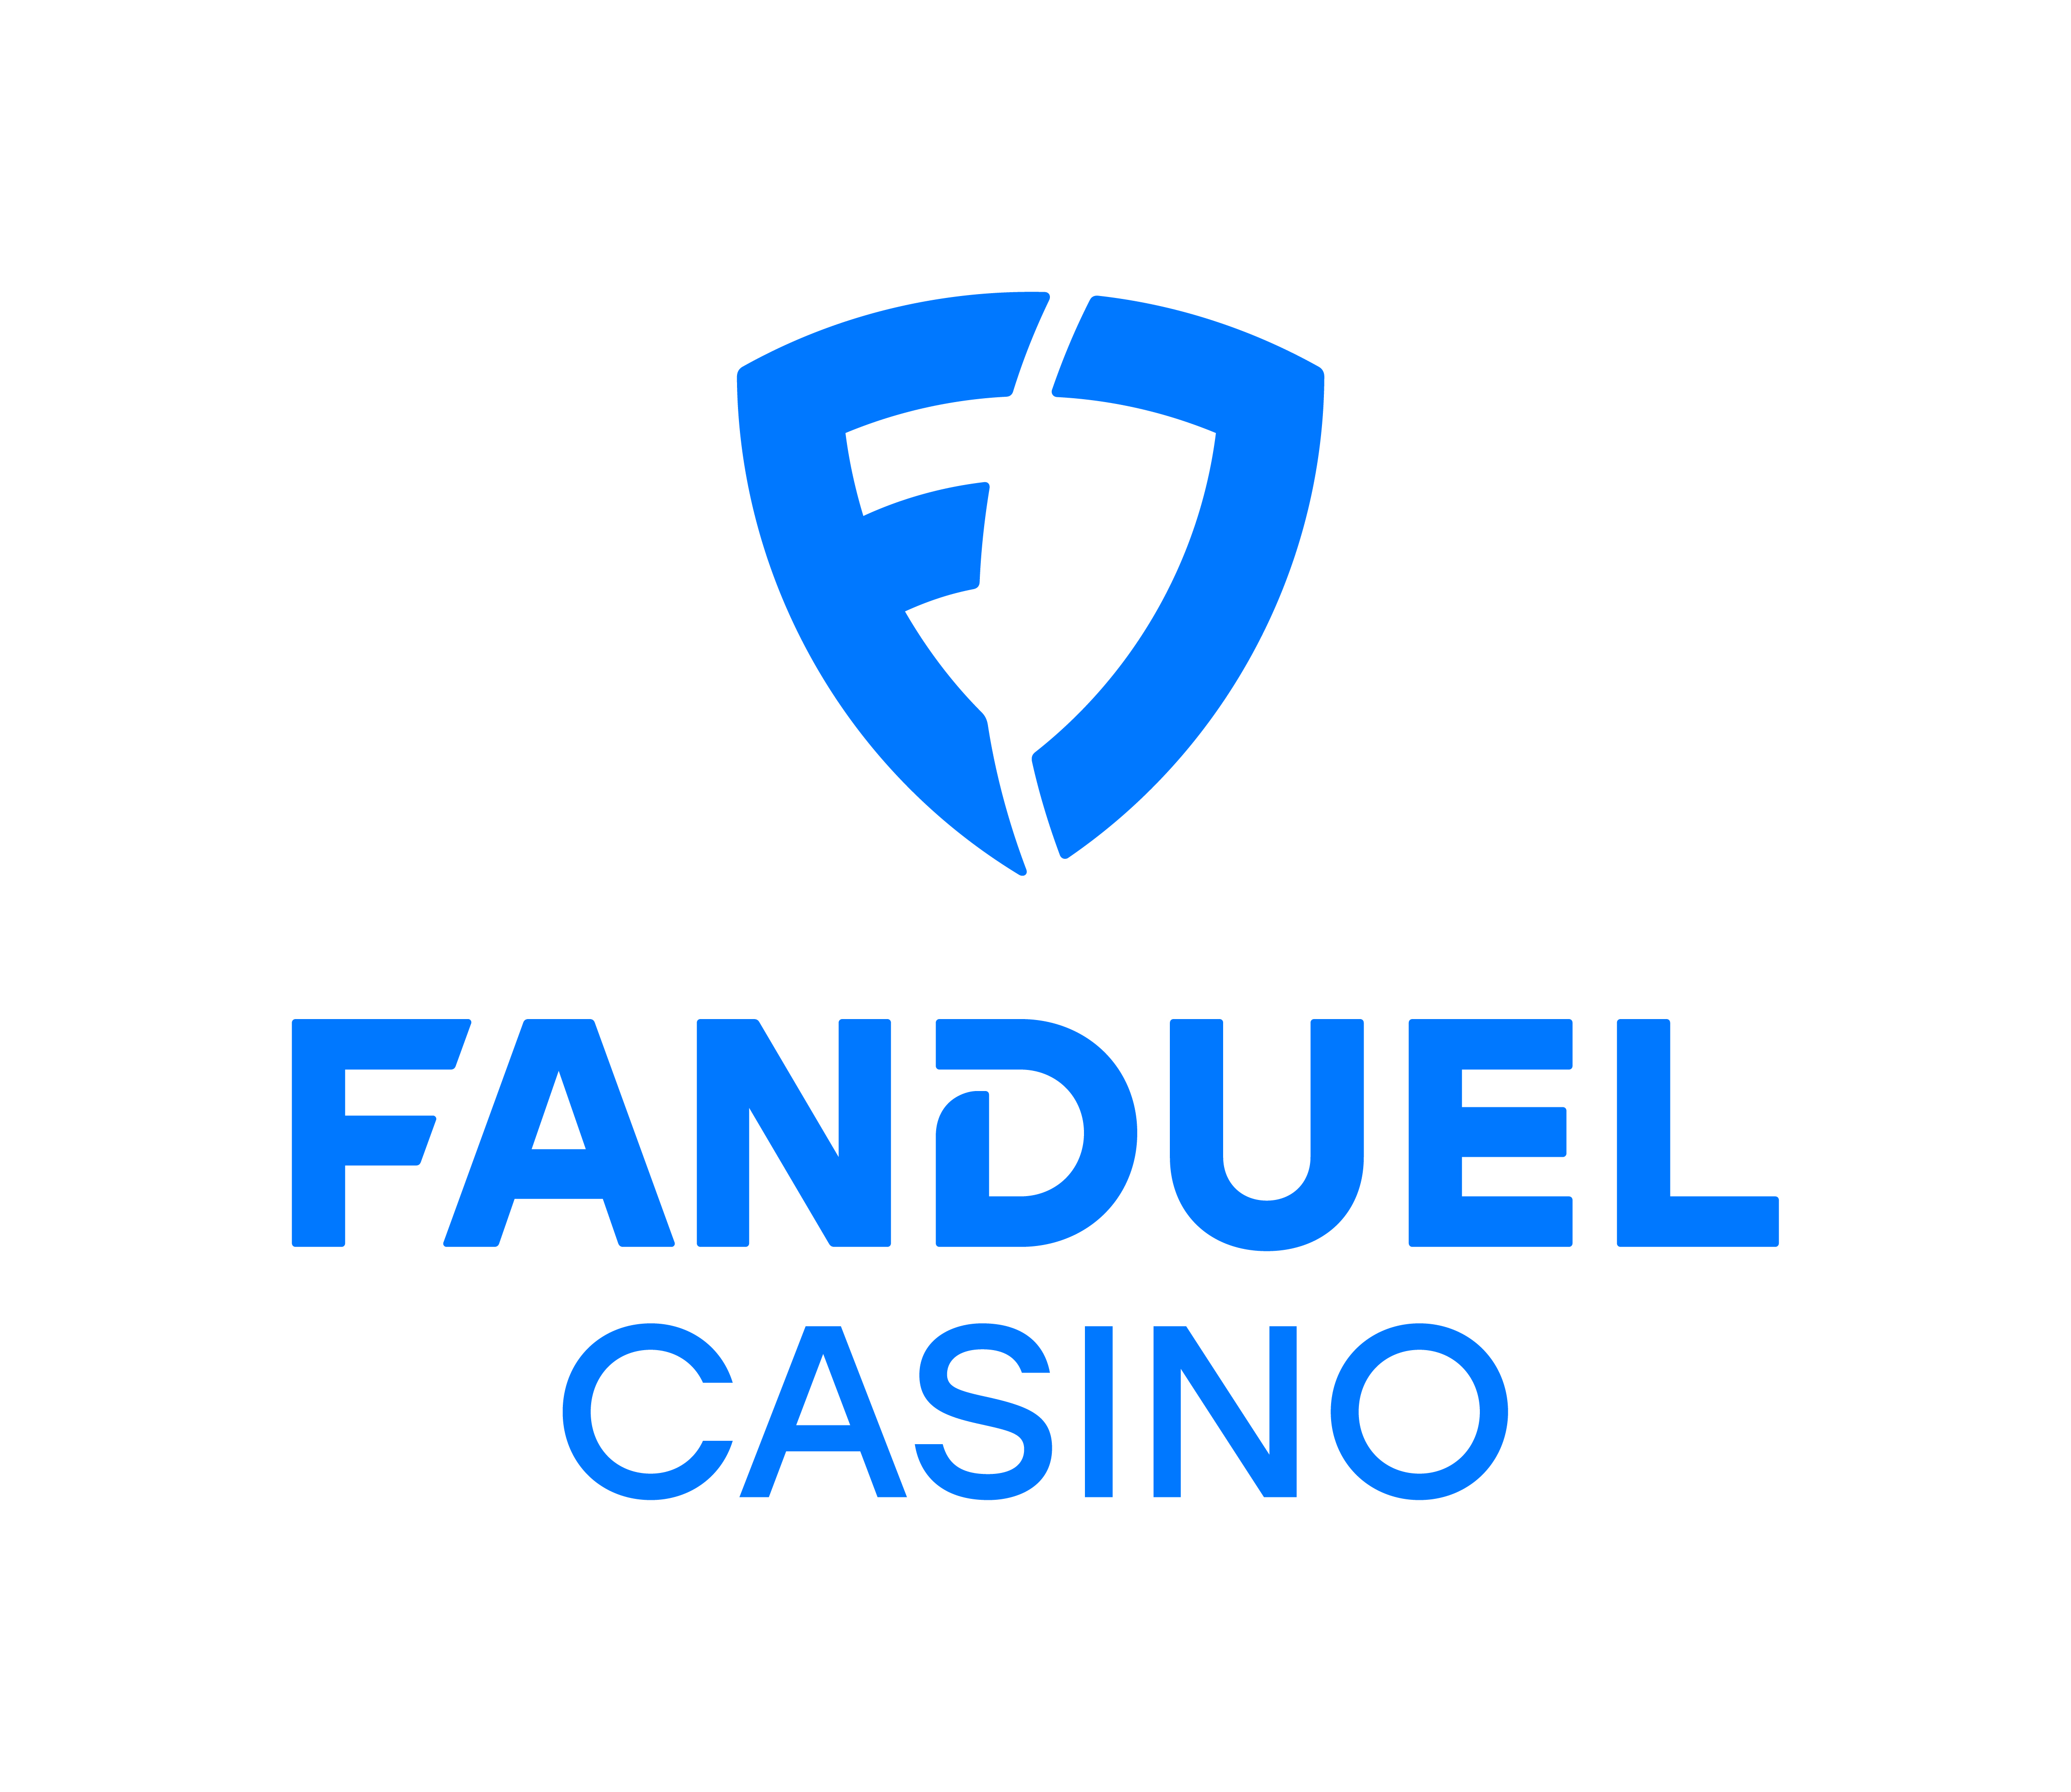 FanDuel casino logo